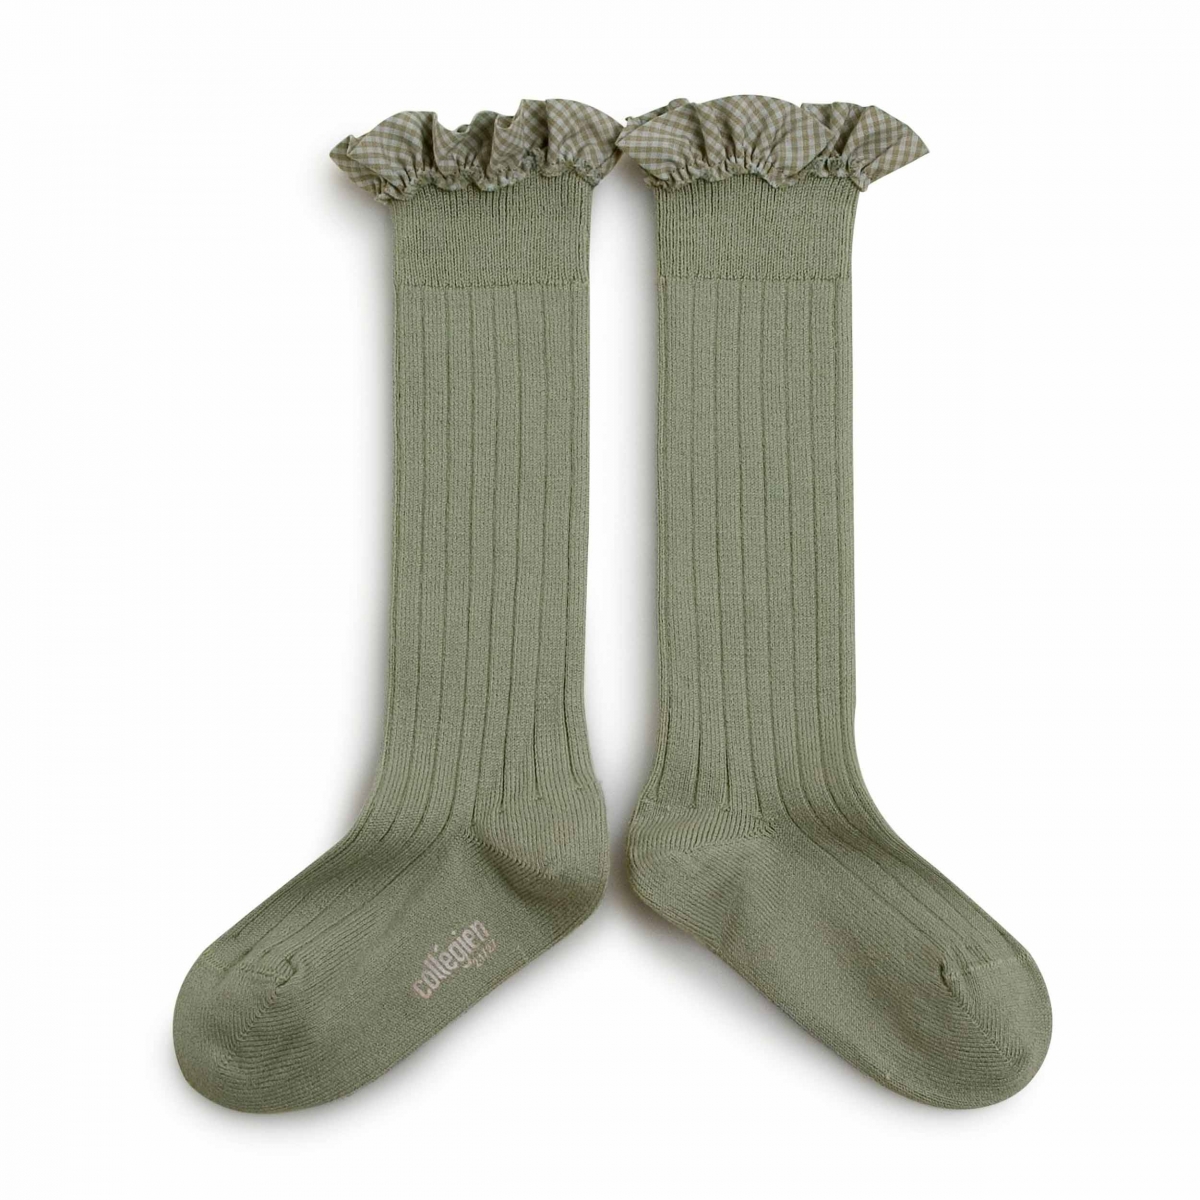 Collégien - Knee high socks Apolline sauge - 스타킹과 양말 - 2961 188 Apolline 